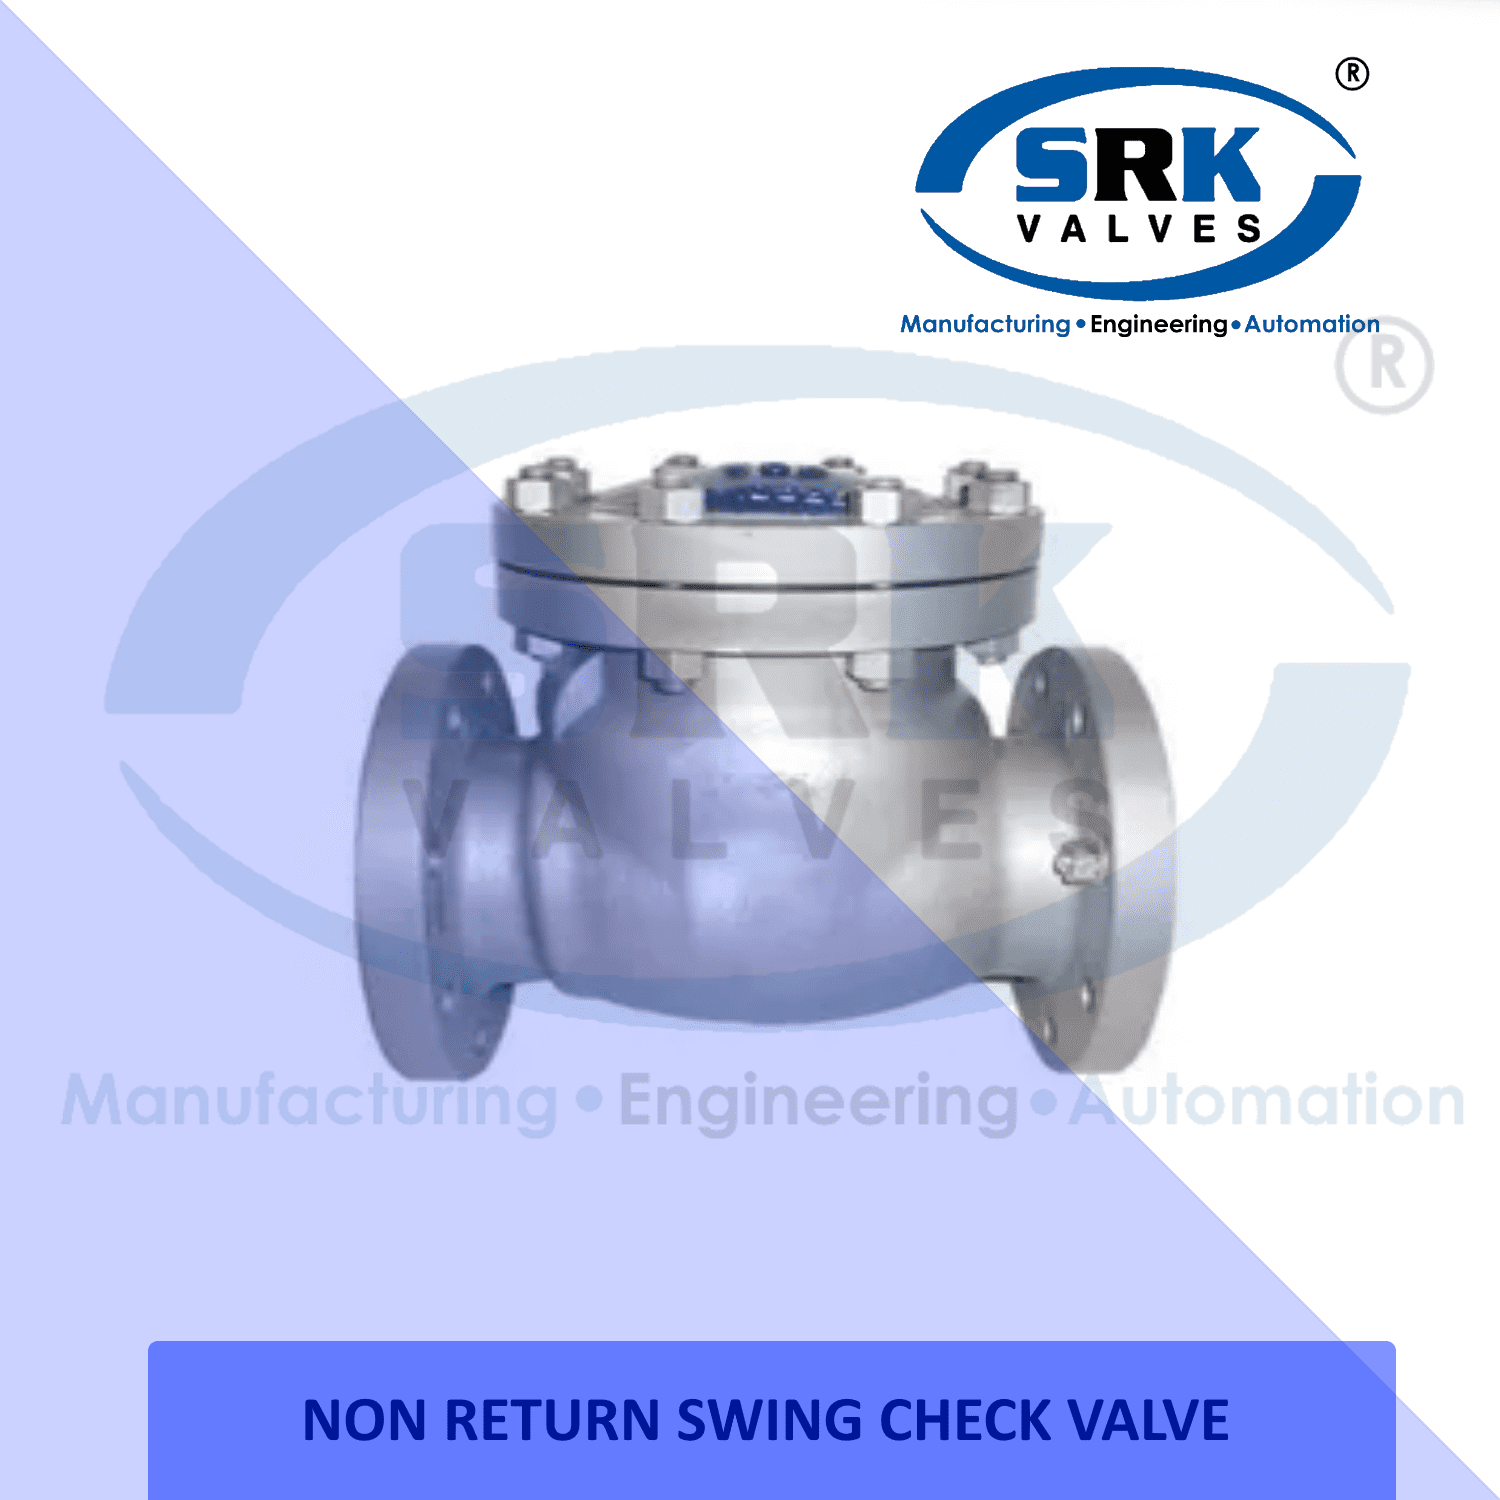 Non return swing check valve